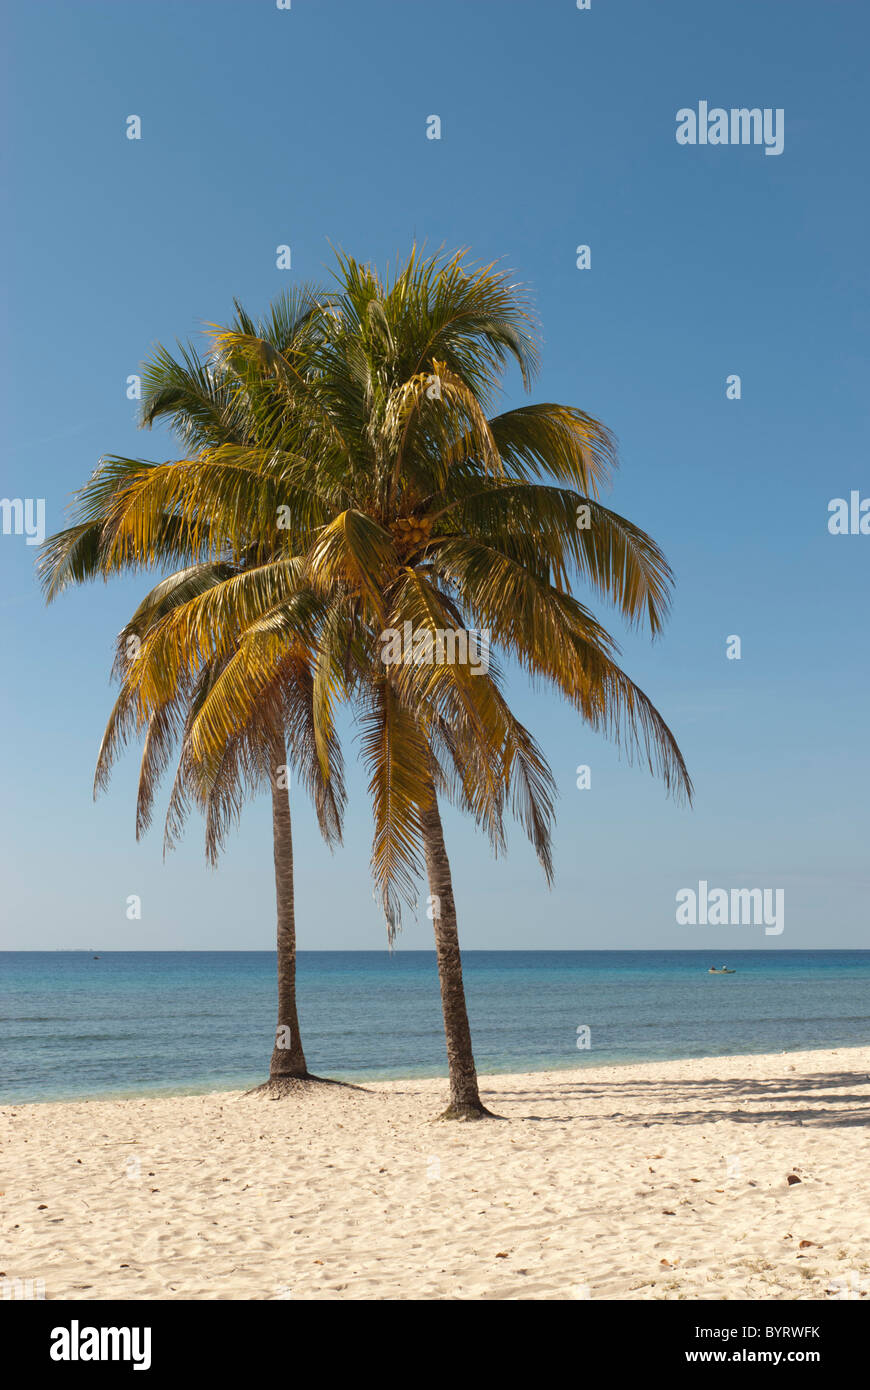 Playa Giron. Karibik-Strand mit Palmen und weißem Sand, Kuba, Caribbean Stockfoto